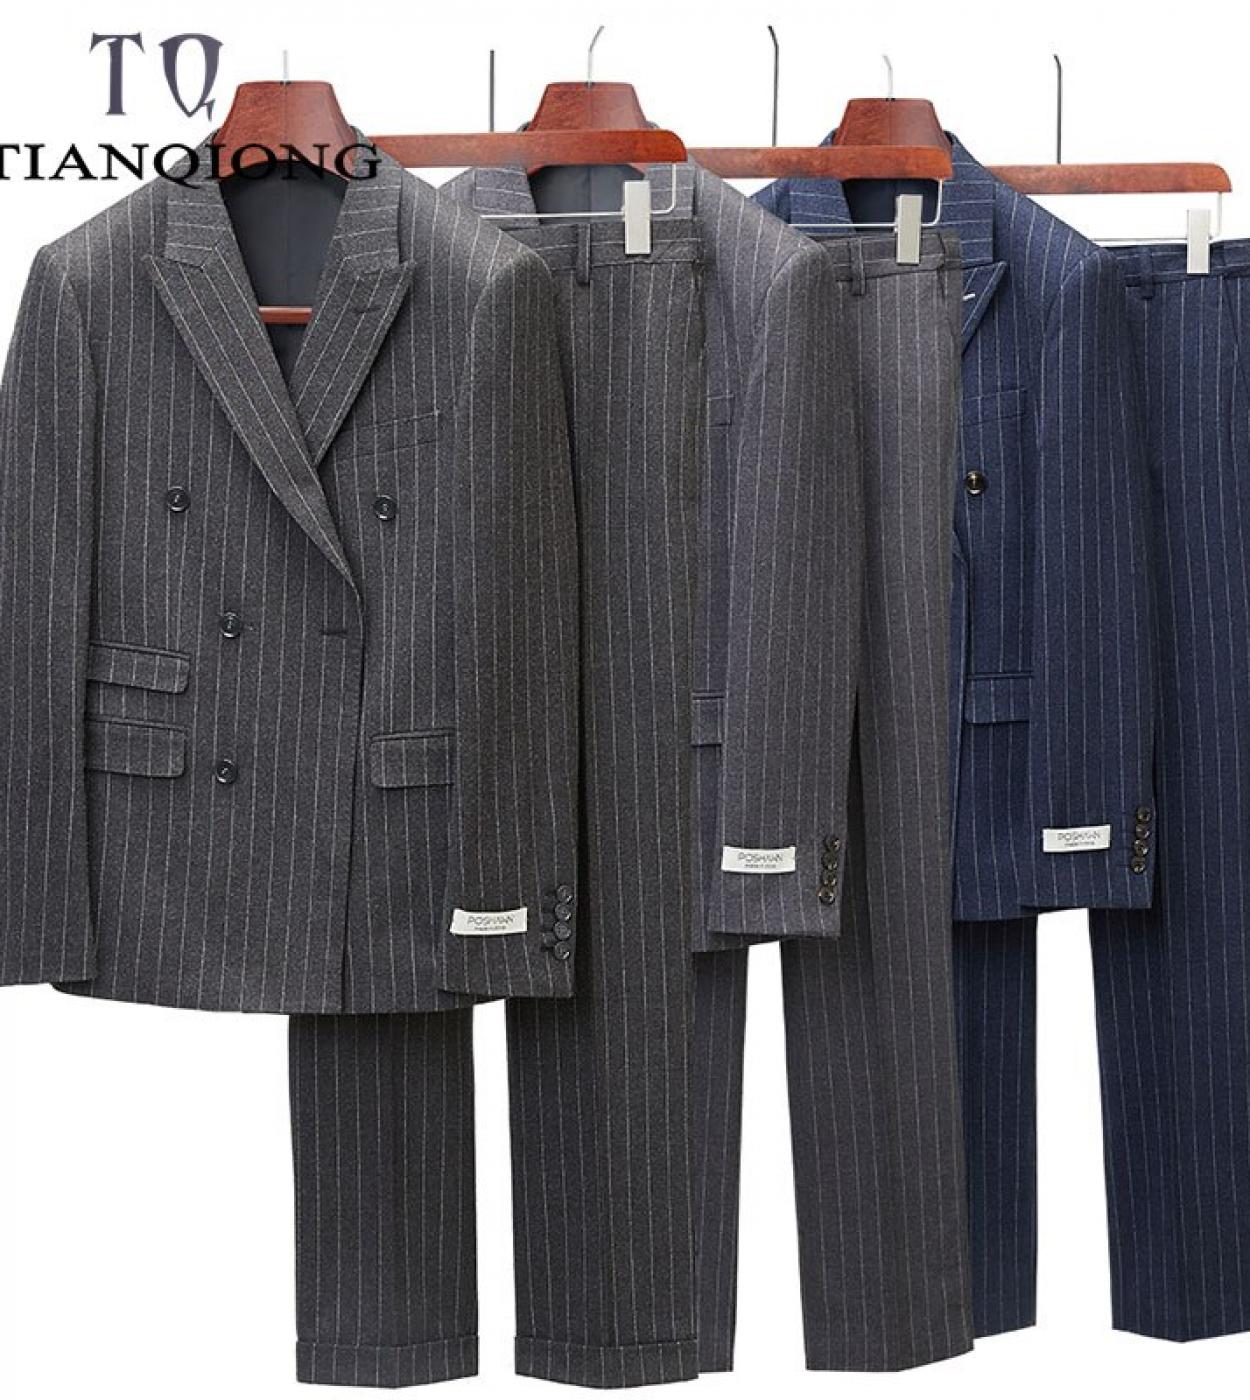  New Arrival Suit Man Wedding Luxury Brand Dark Grey Light Khaki Stripe Suit Slim Fit Three Piece Veste Homme Mariagesui